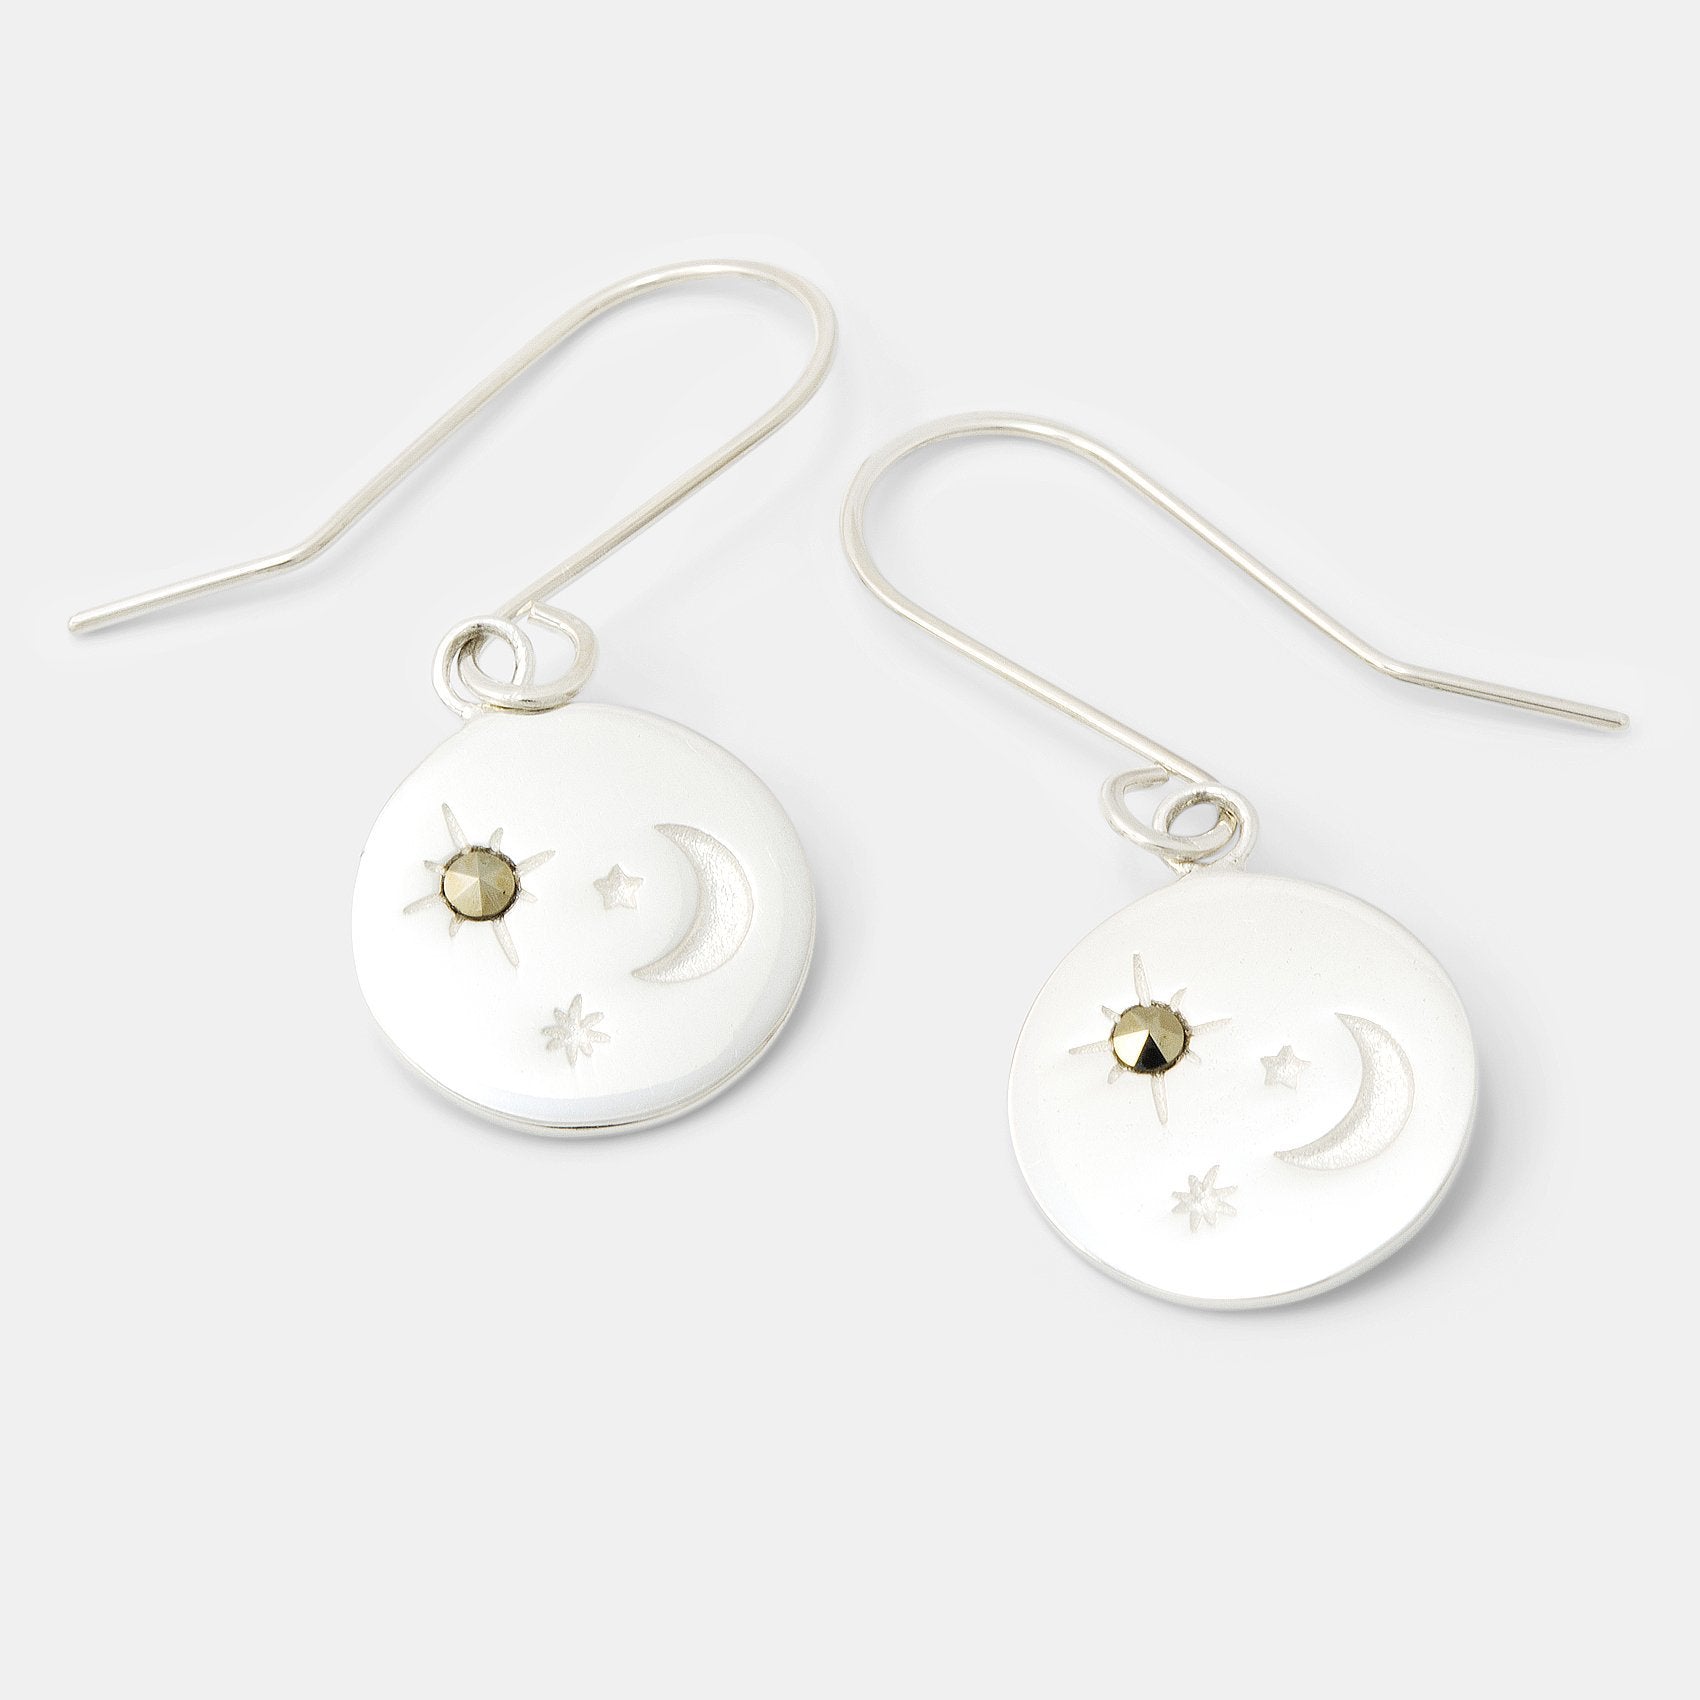 Moon & stars amulet drop earrings - Simone Walsh Jewellery Australia